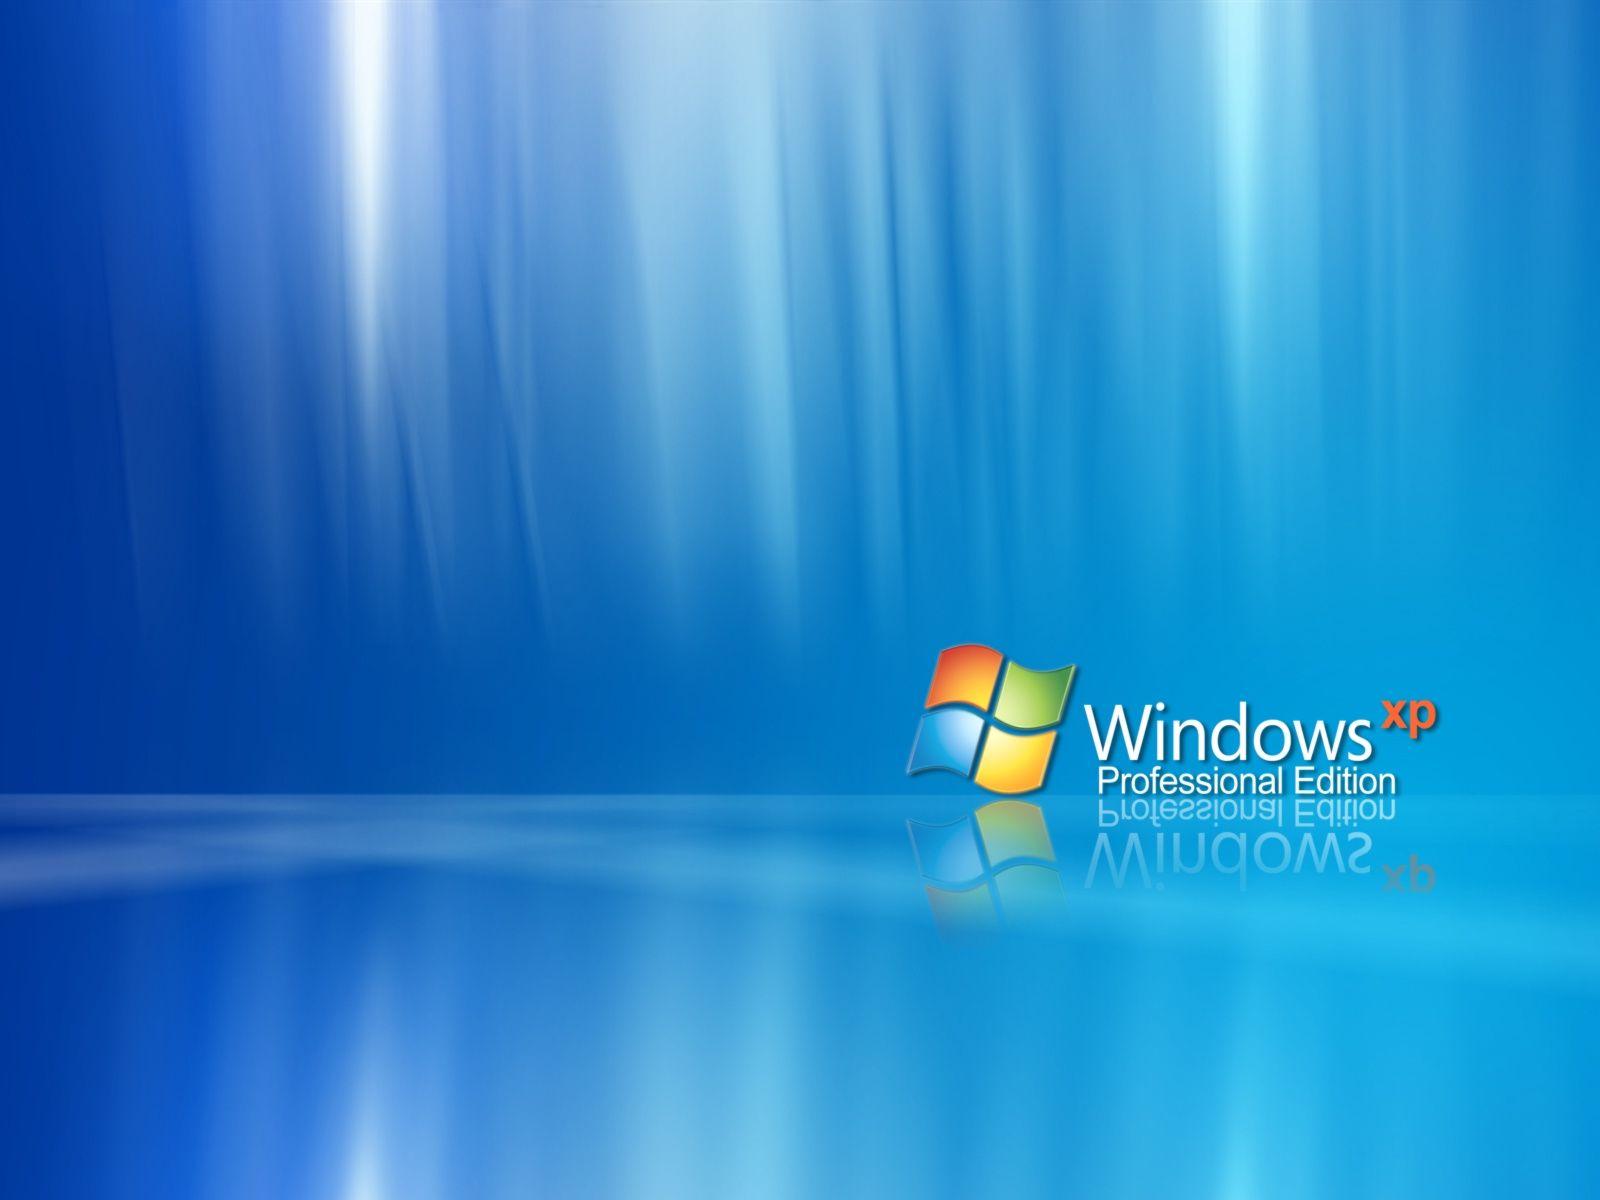 Windows XP Professional Edition desktop wallpaper